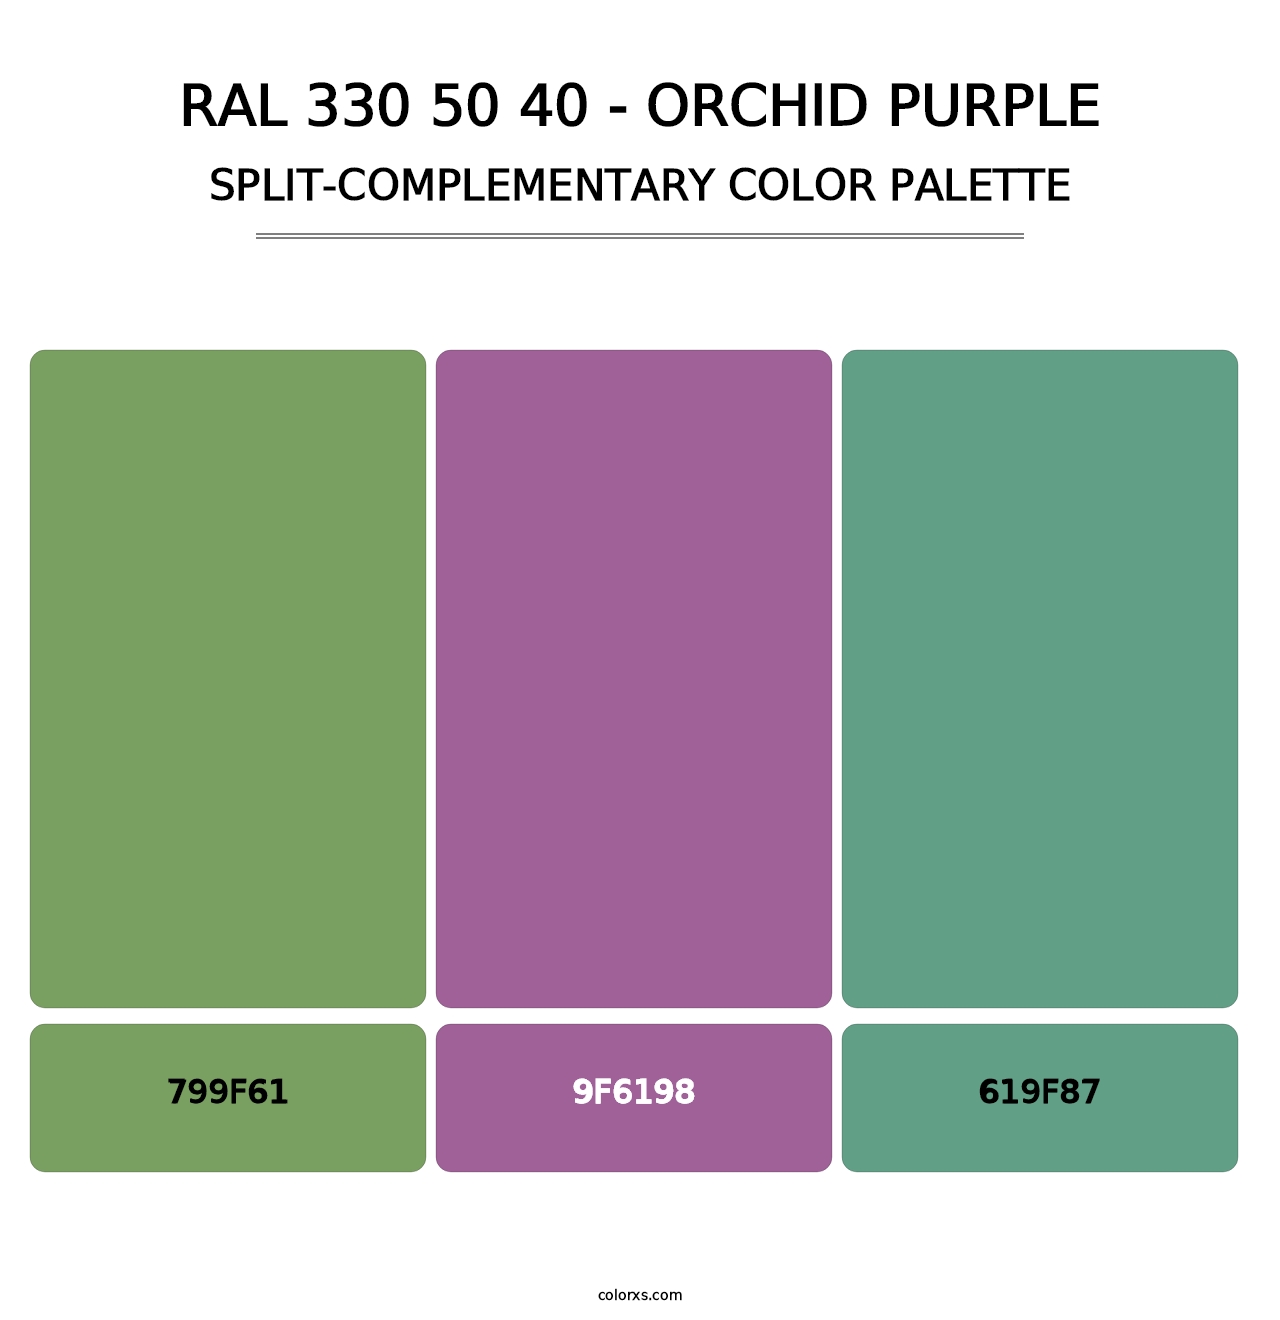 RAL 330 50 40 - Orchid Purple - Split-Complementary Color Palette